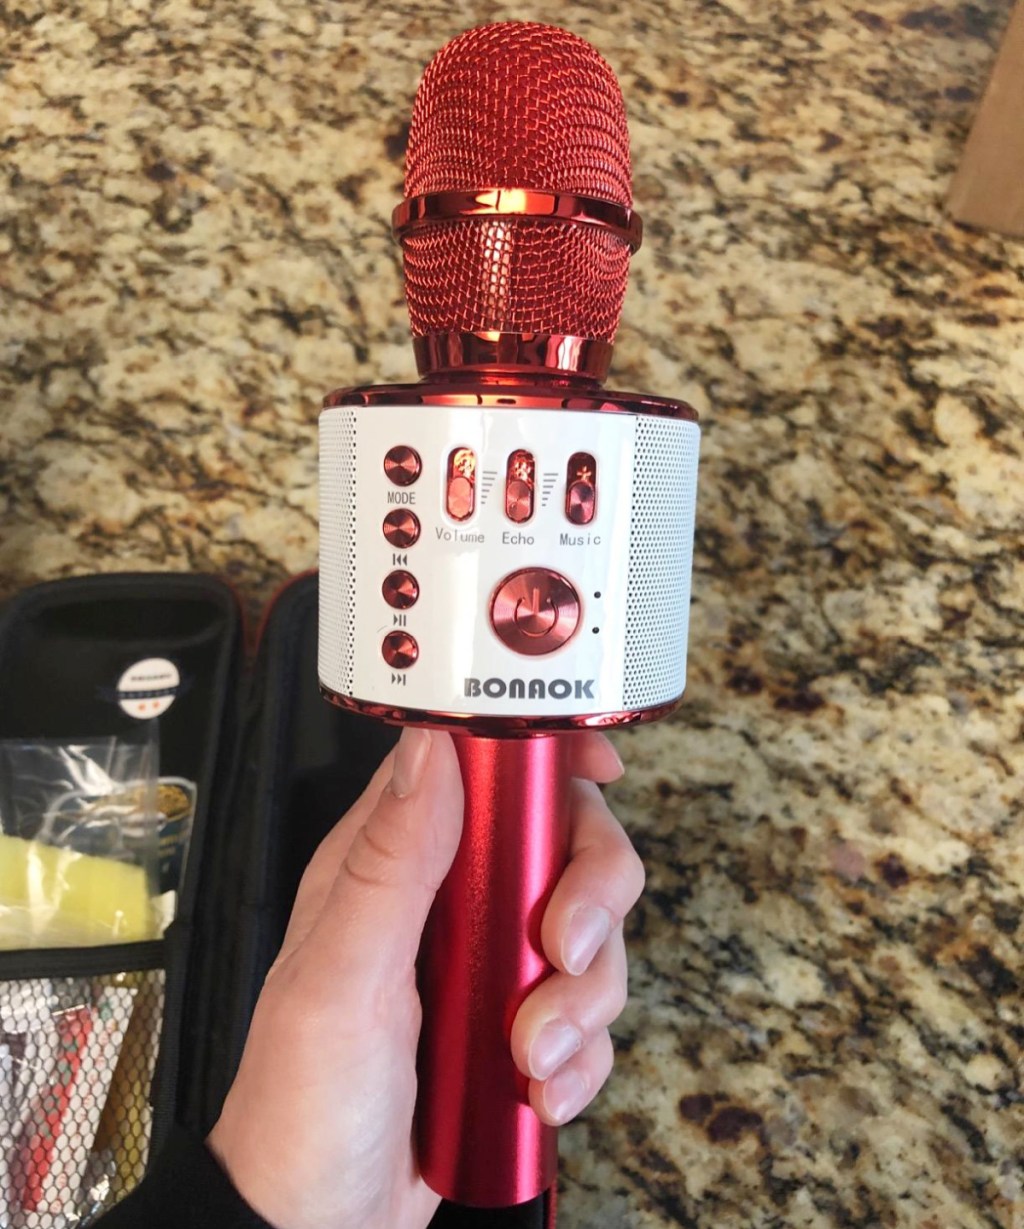 A karaoke microphone given as a white elephant gift idea